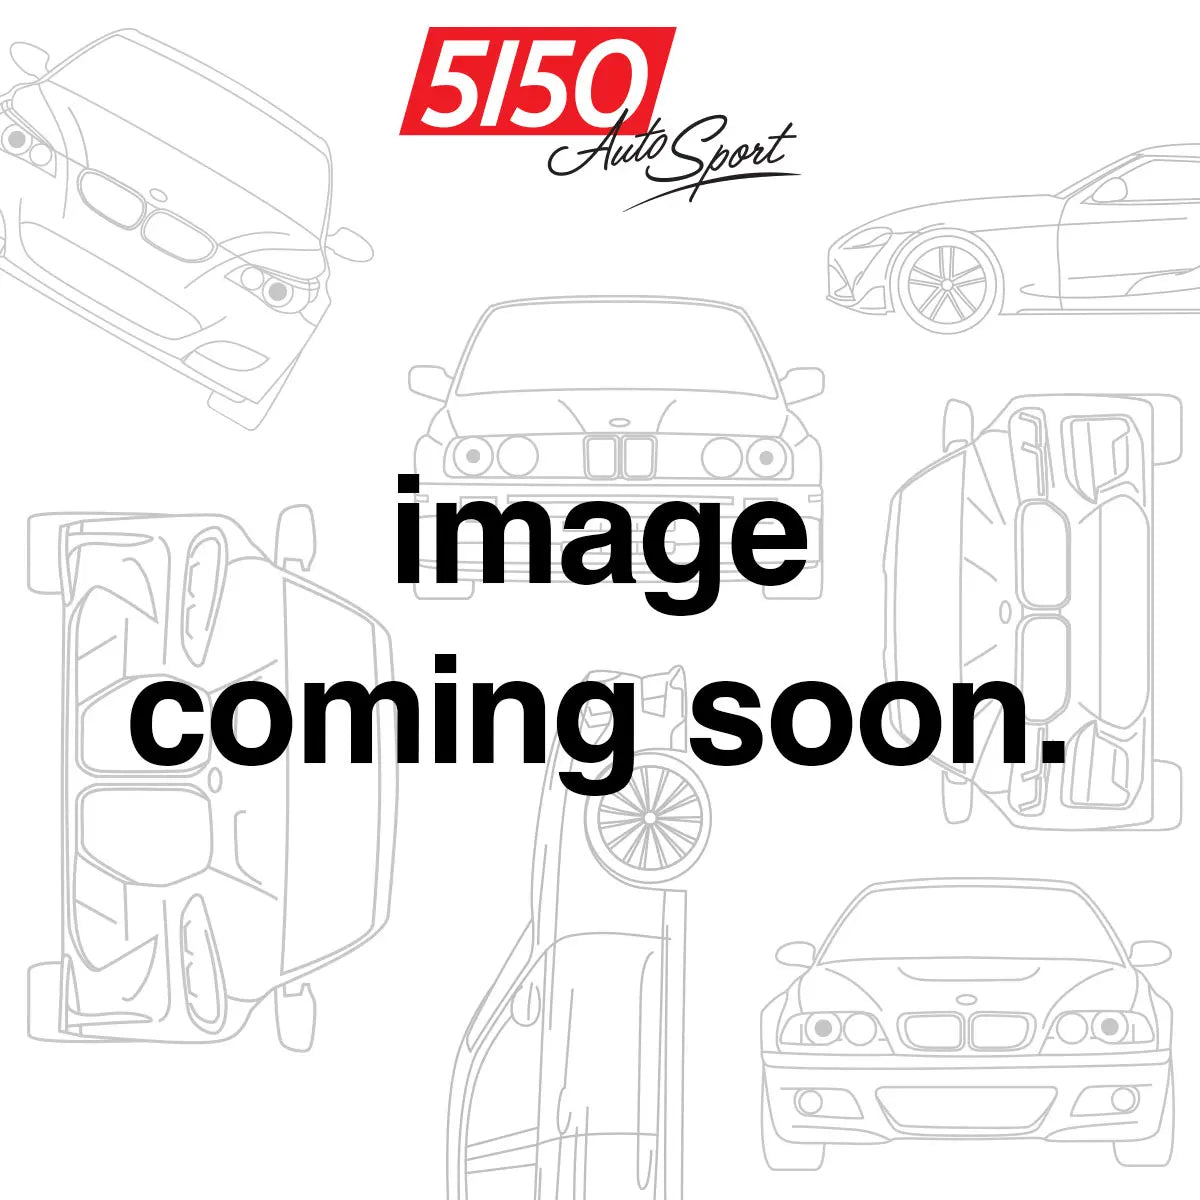 5150 AutoSport Pro-Xtreme Cylinder Head Service, BMW S55